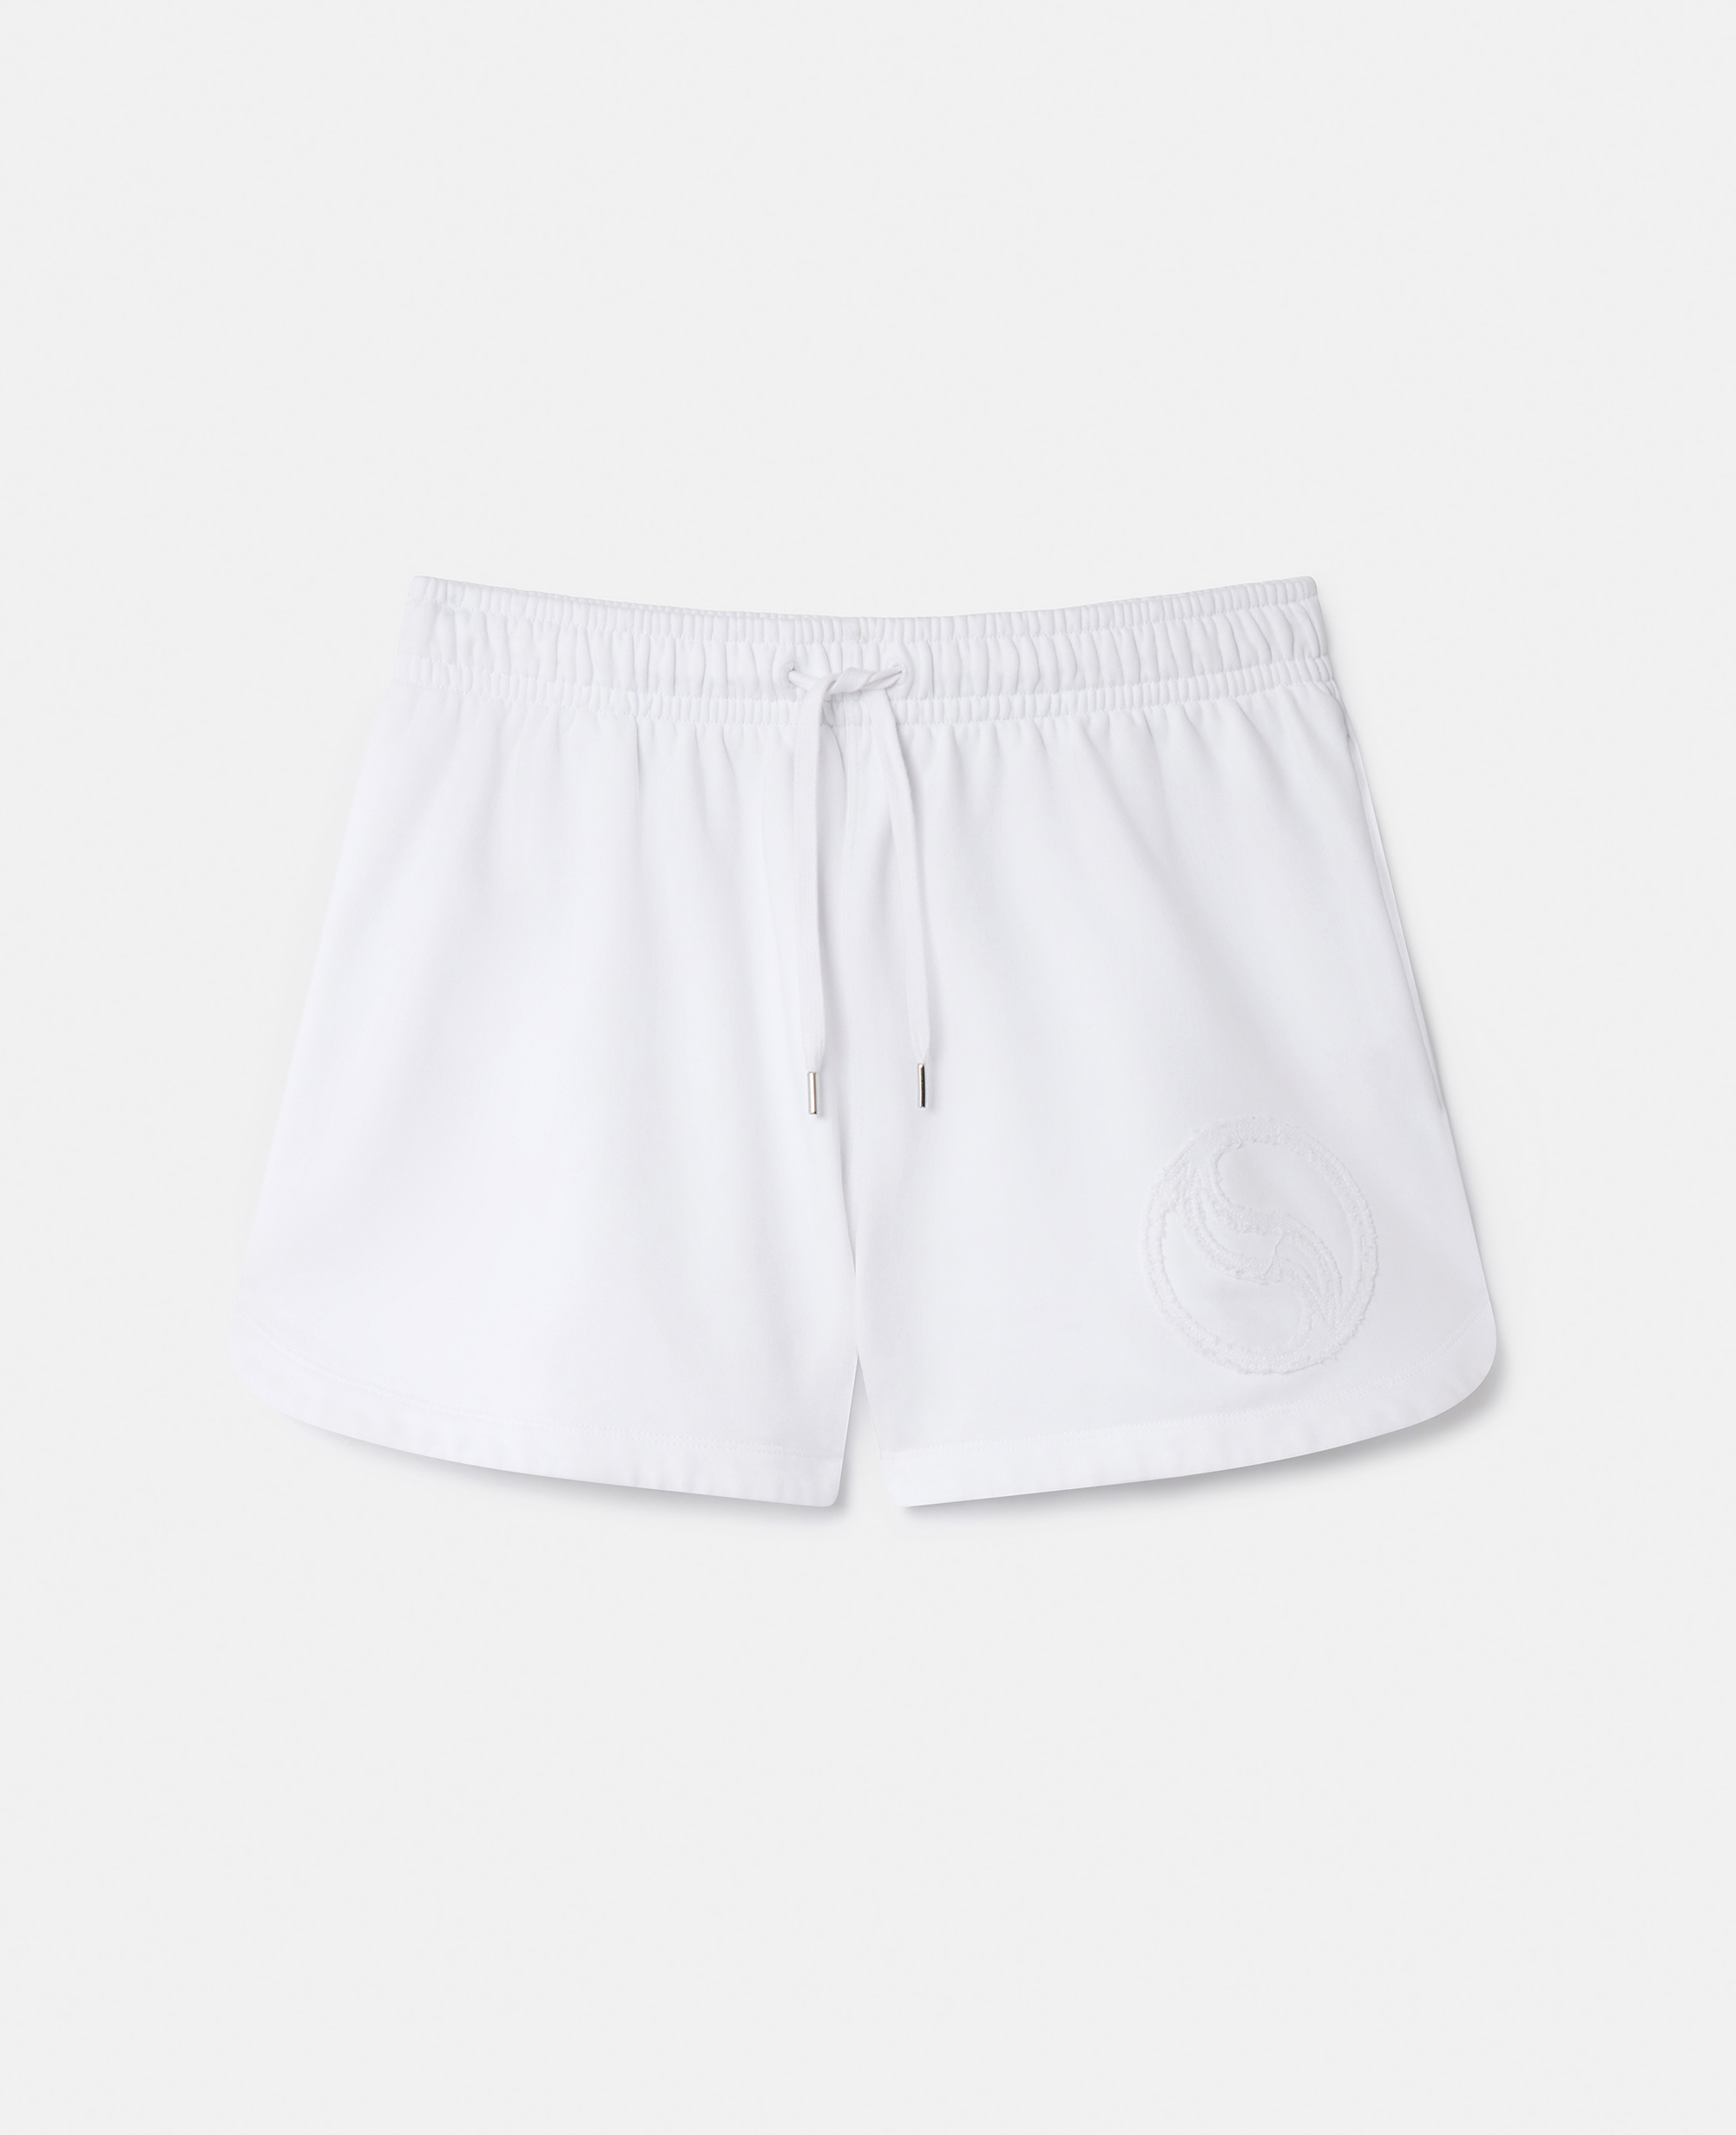 stella mccartney - s-wave jersey drawstring shorts, woman, white, size: s